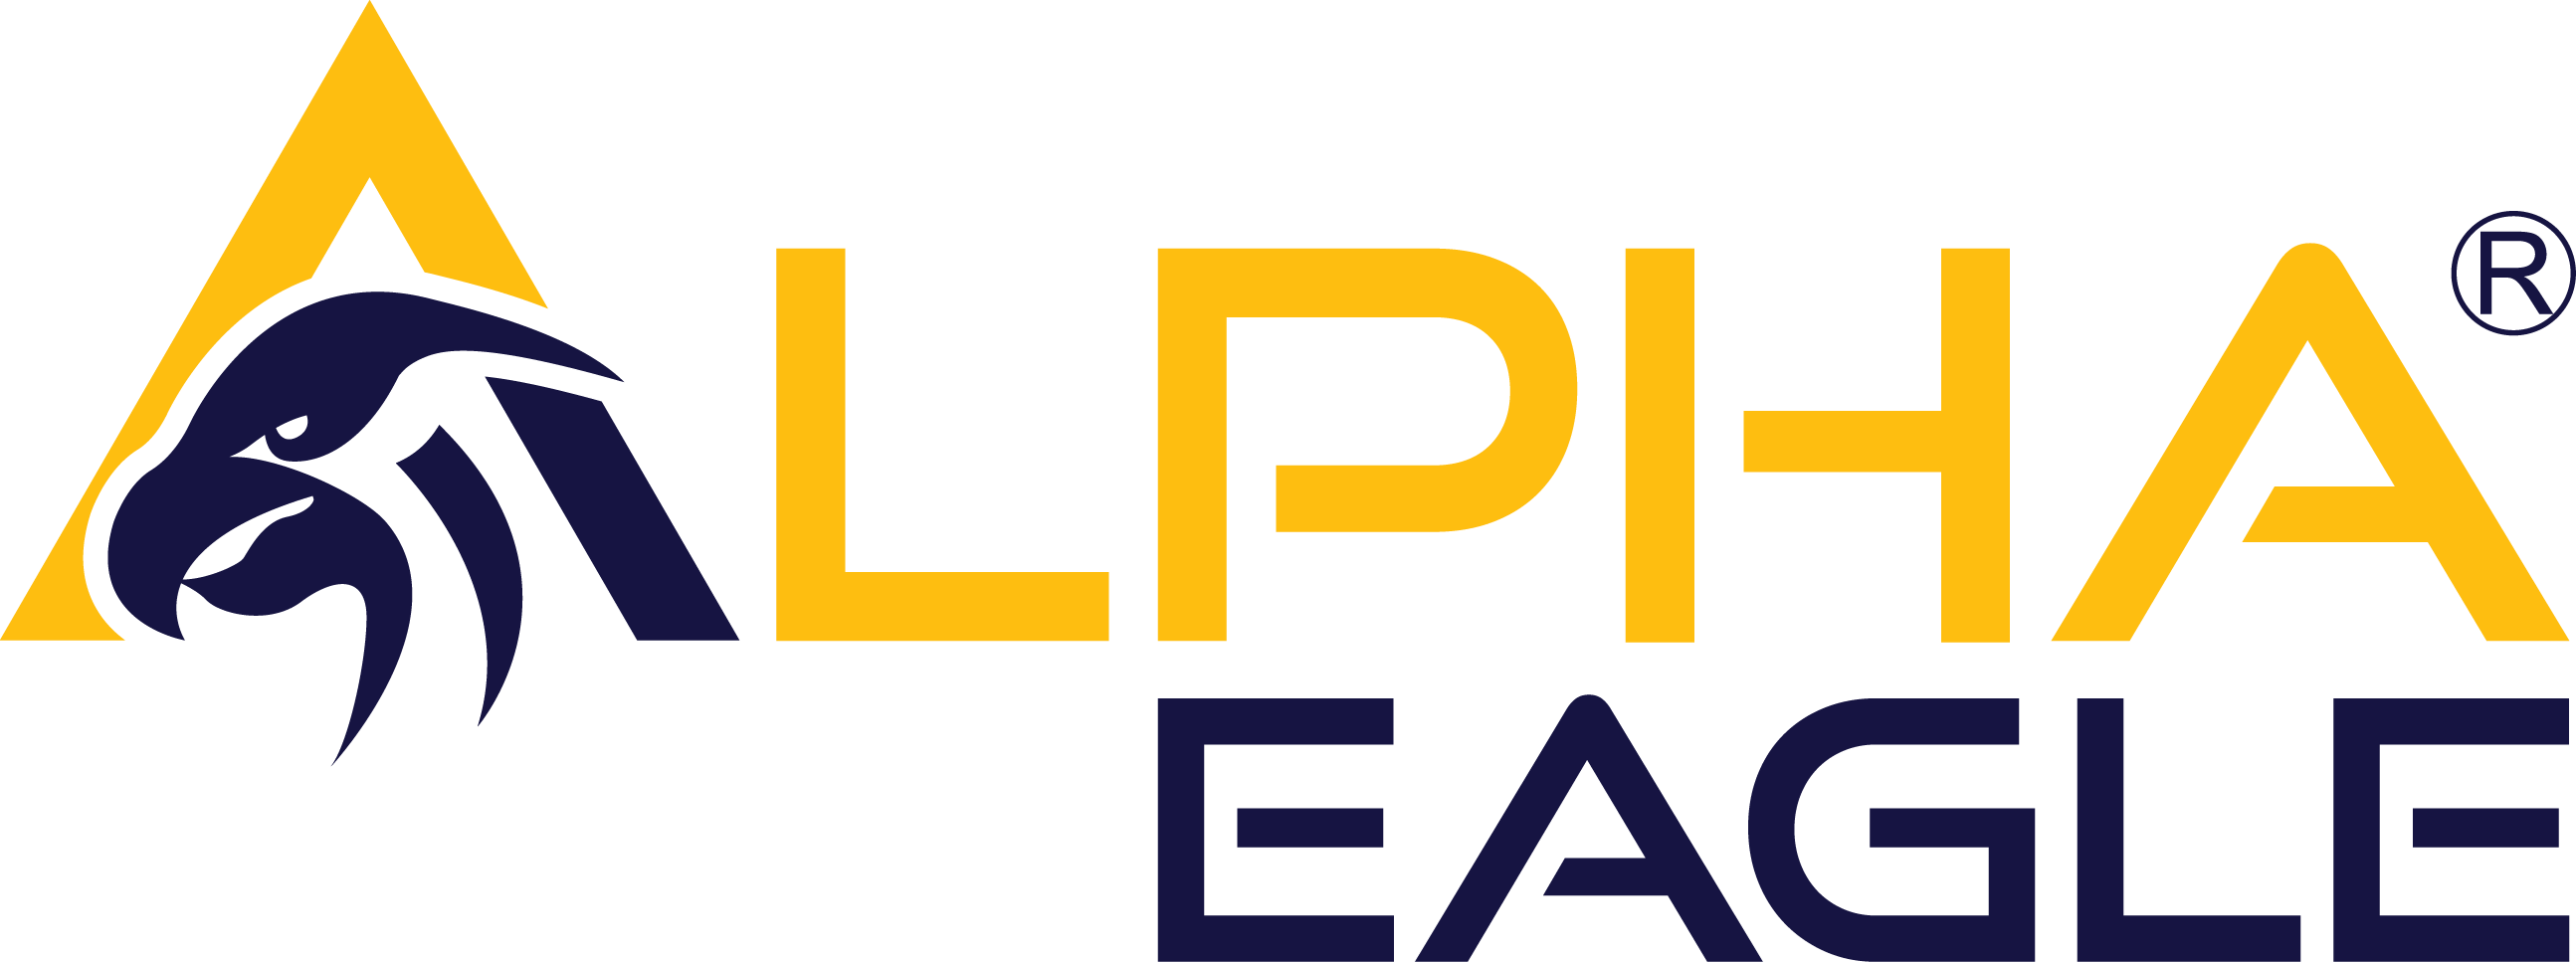 Eagle Aviation Logo - Alpha Eagle Aviation and Science Foundation Fund